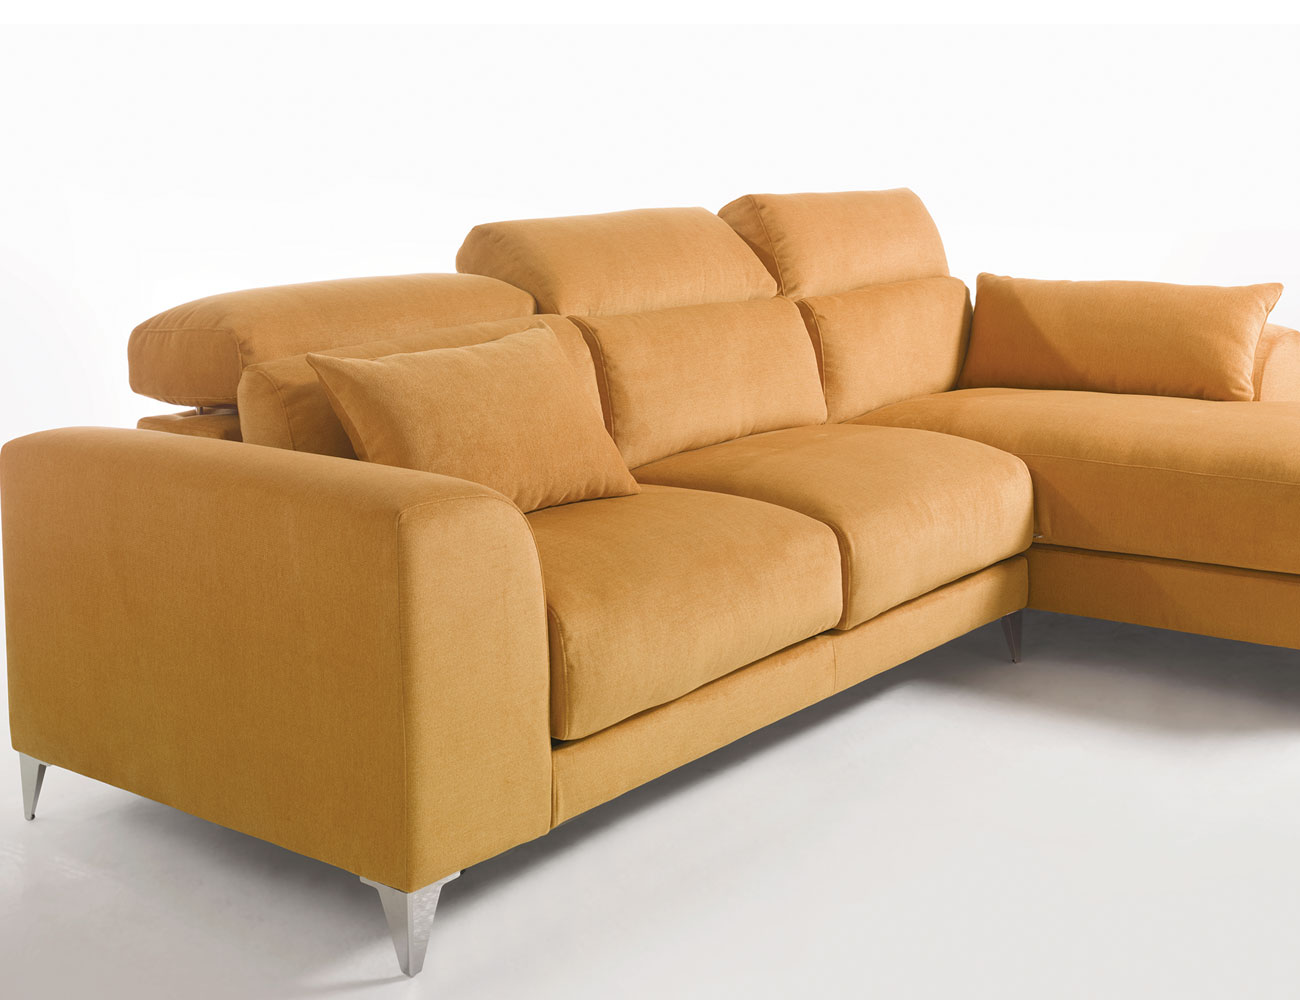 Sofa chaiselongue gran lujo decorativo patas altas amarillo 22